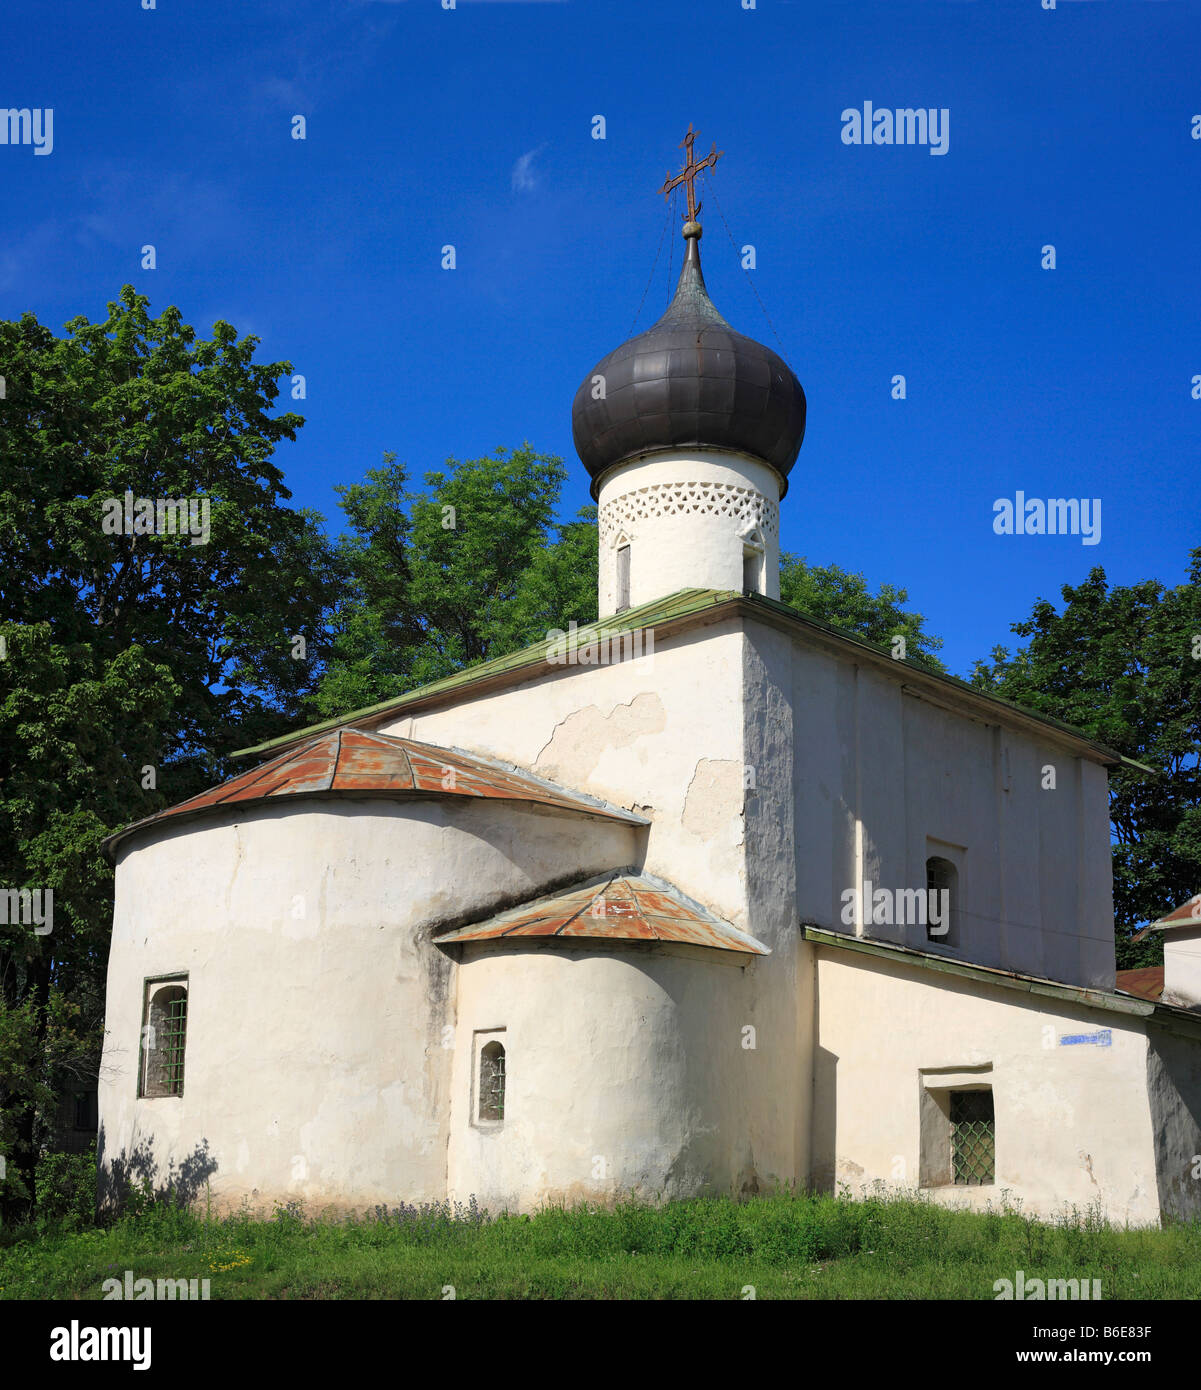 Religious architecture, dome of the church, Pskov, Russia Stock Photo